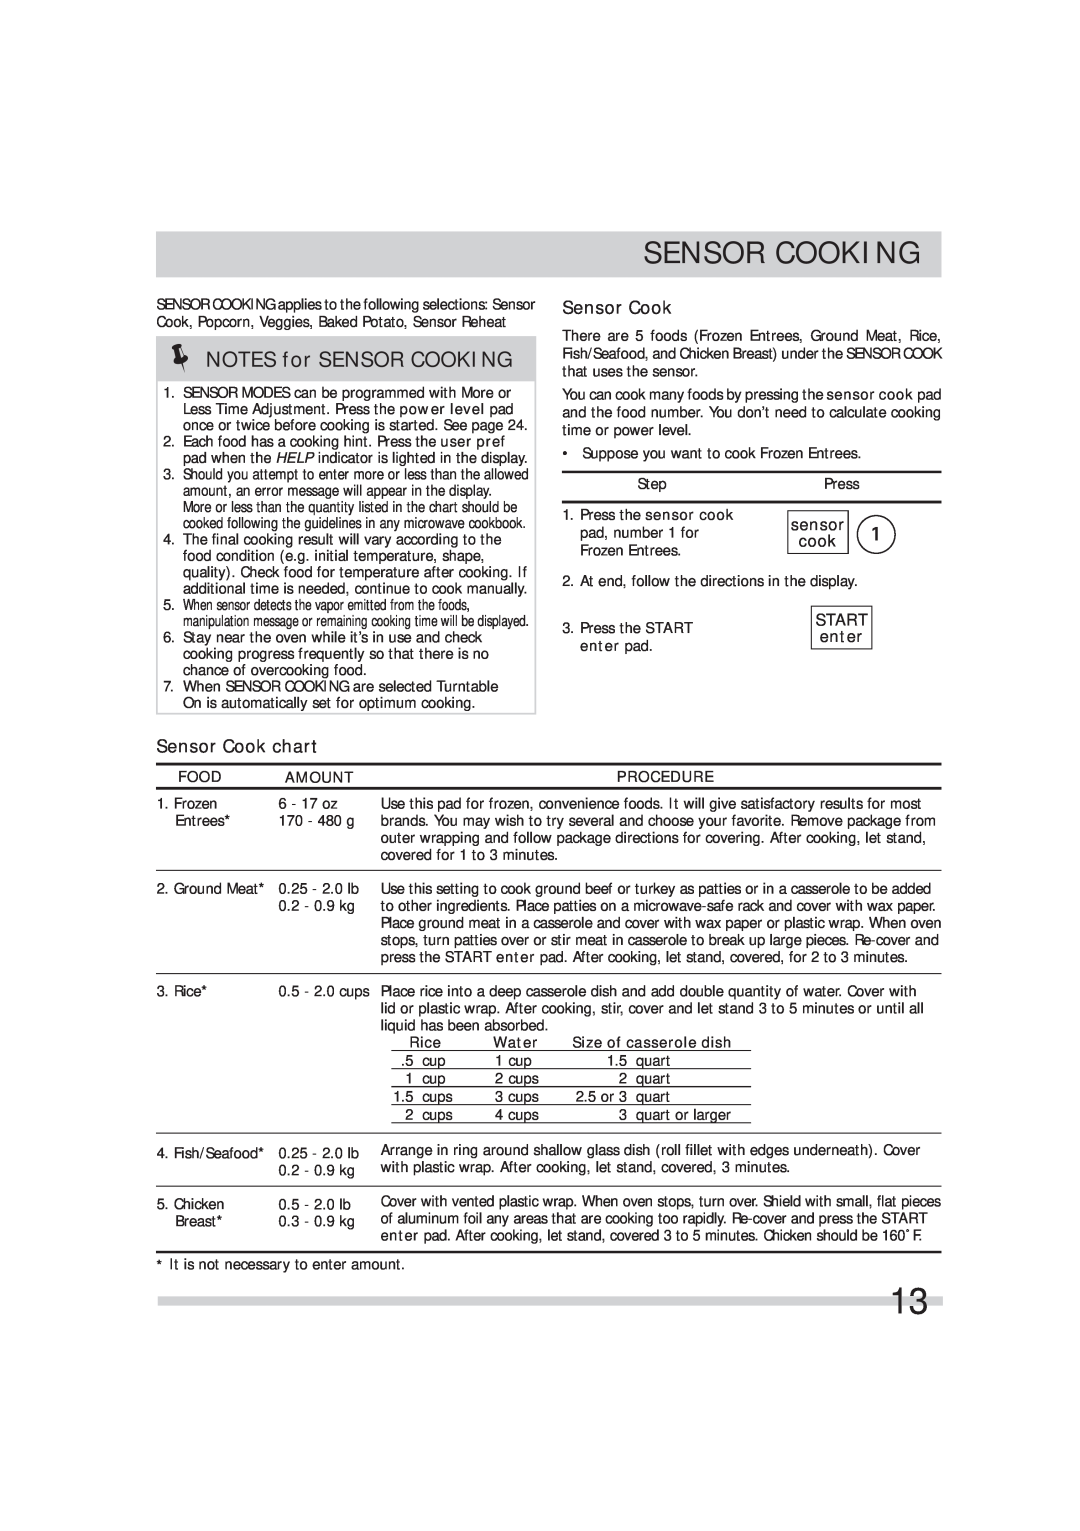 Frigidaire 316495054 NOTES for SENSOR COOKING, Sensor Cook chart, cook, enter, sensor, Food, Amount, Procedure, Rice 